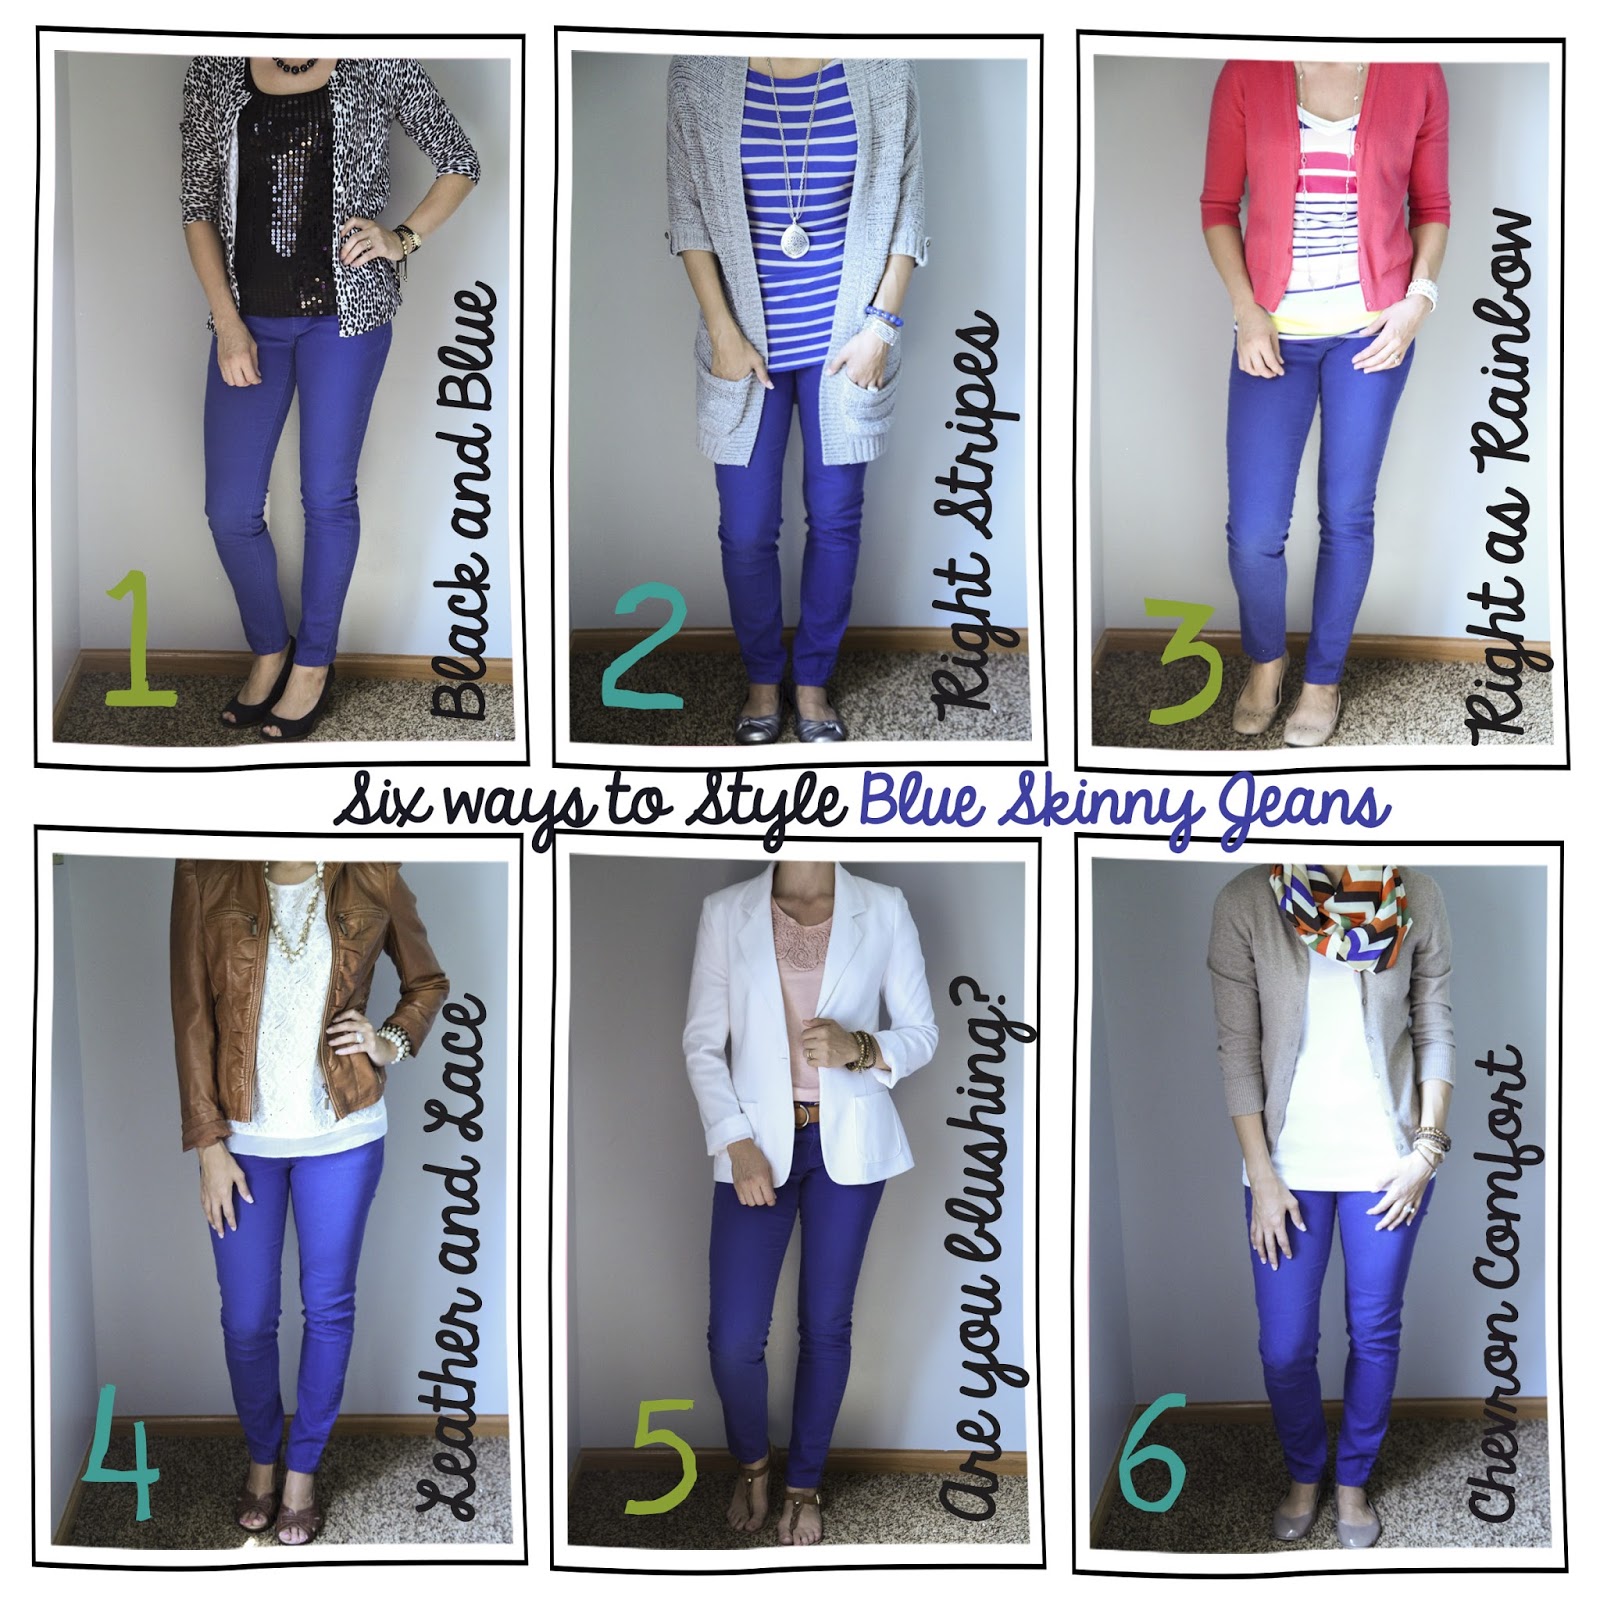 Tutor My Style: Six Ways to Style--Blue skinnies!